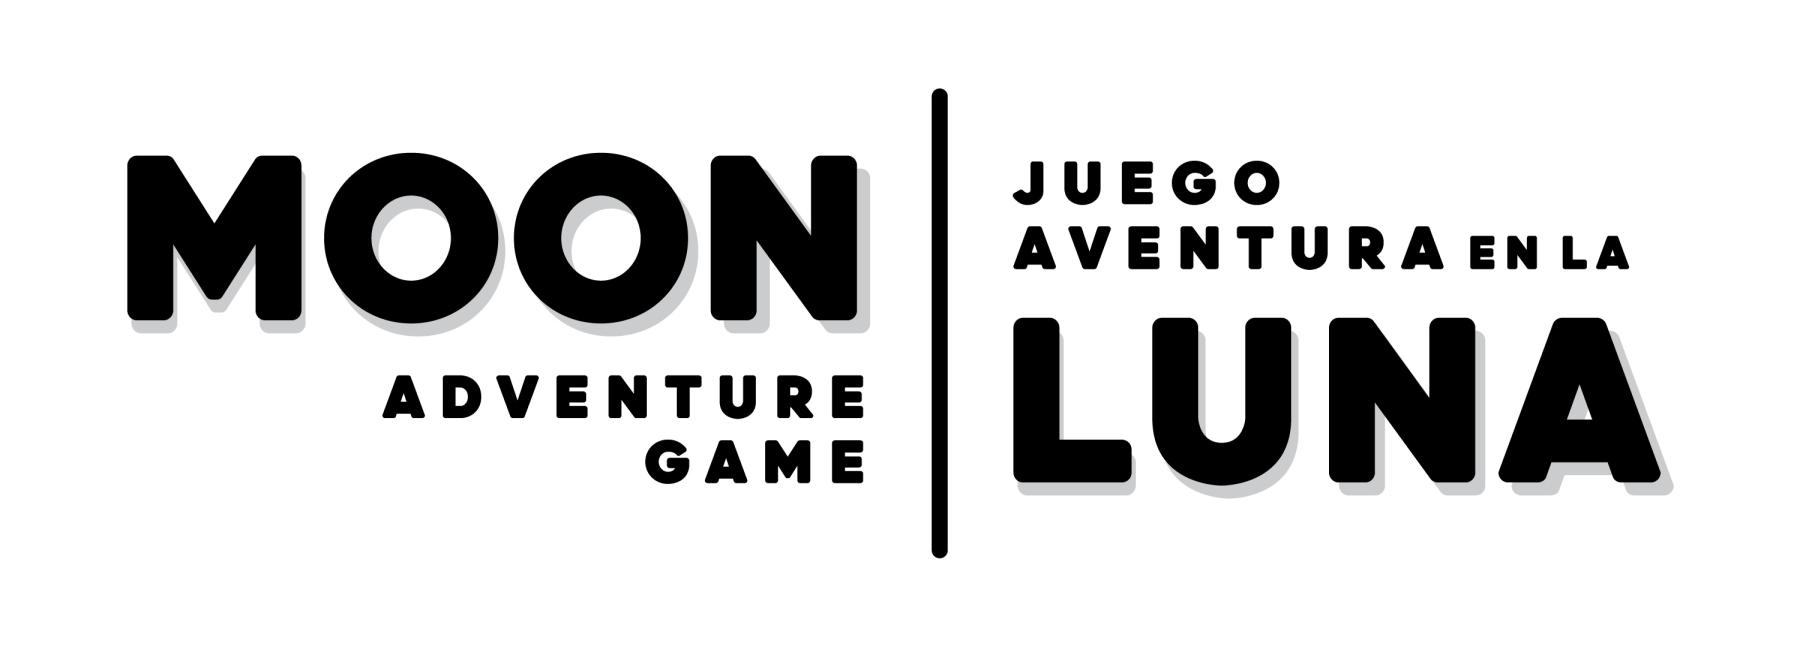 Moon Adventure Game logo